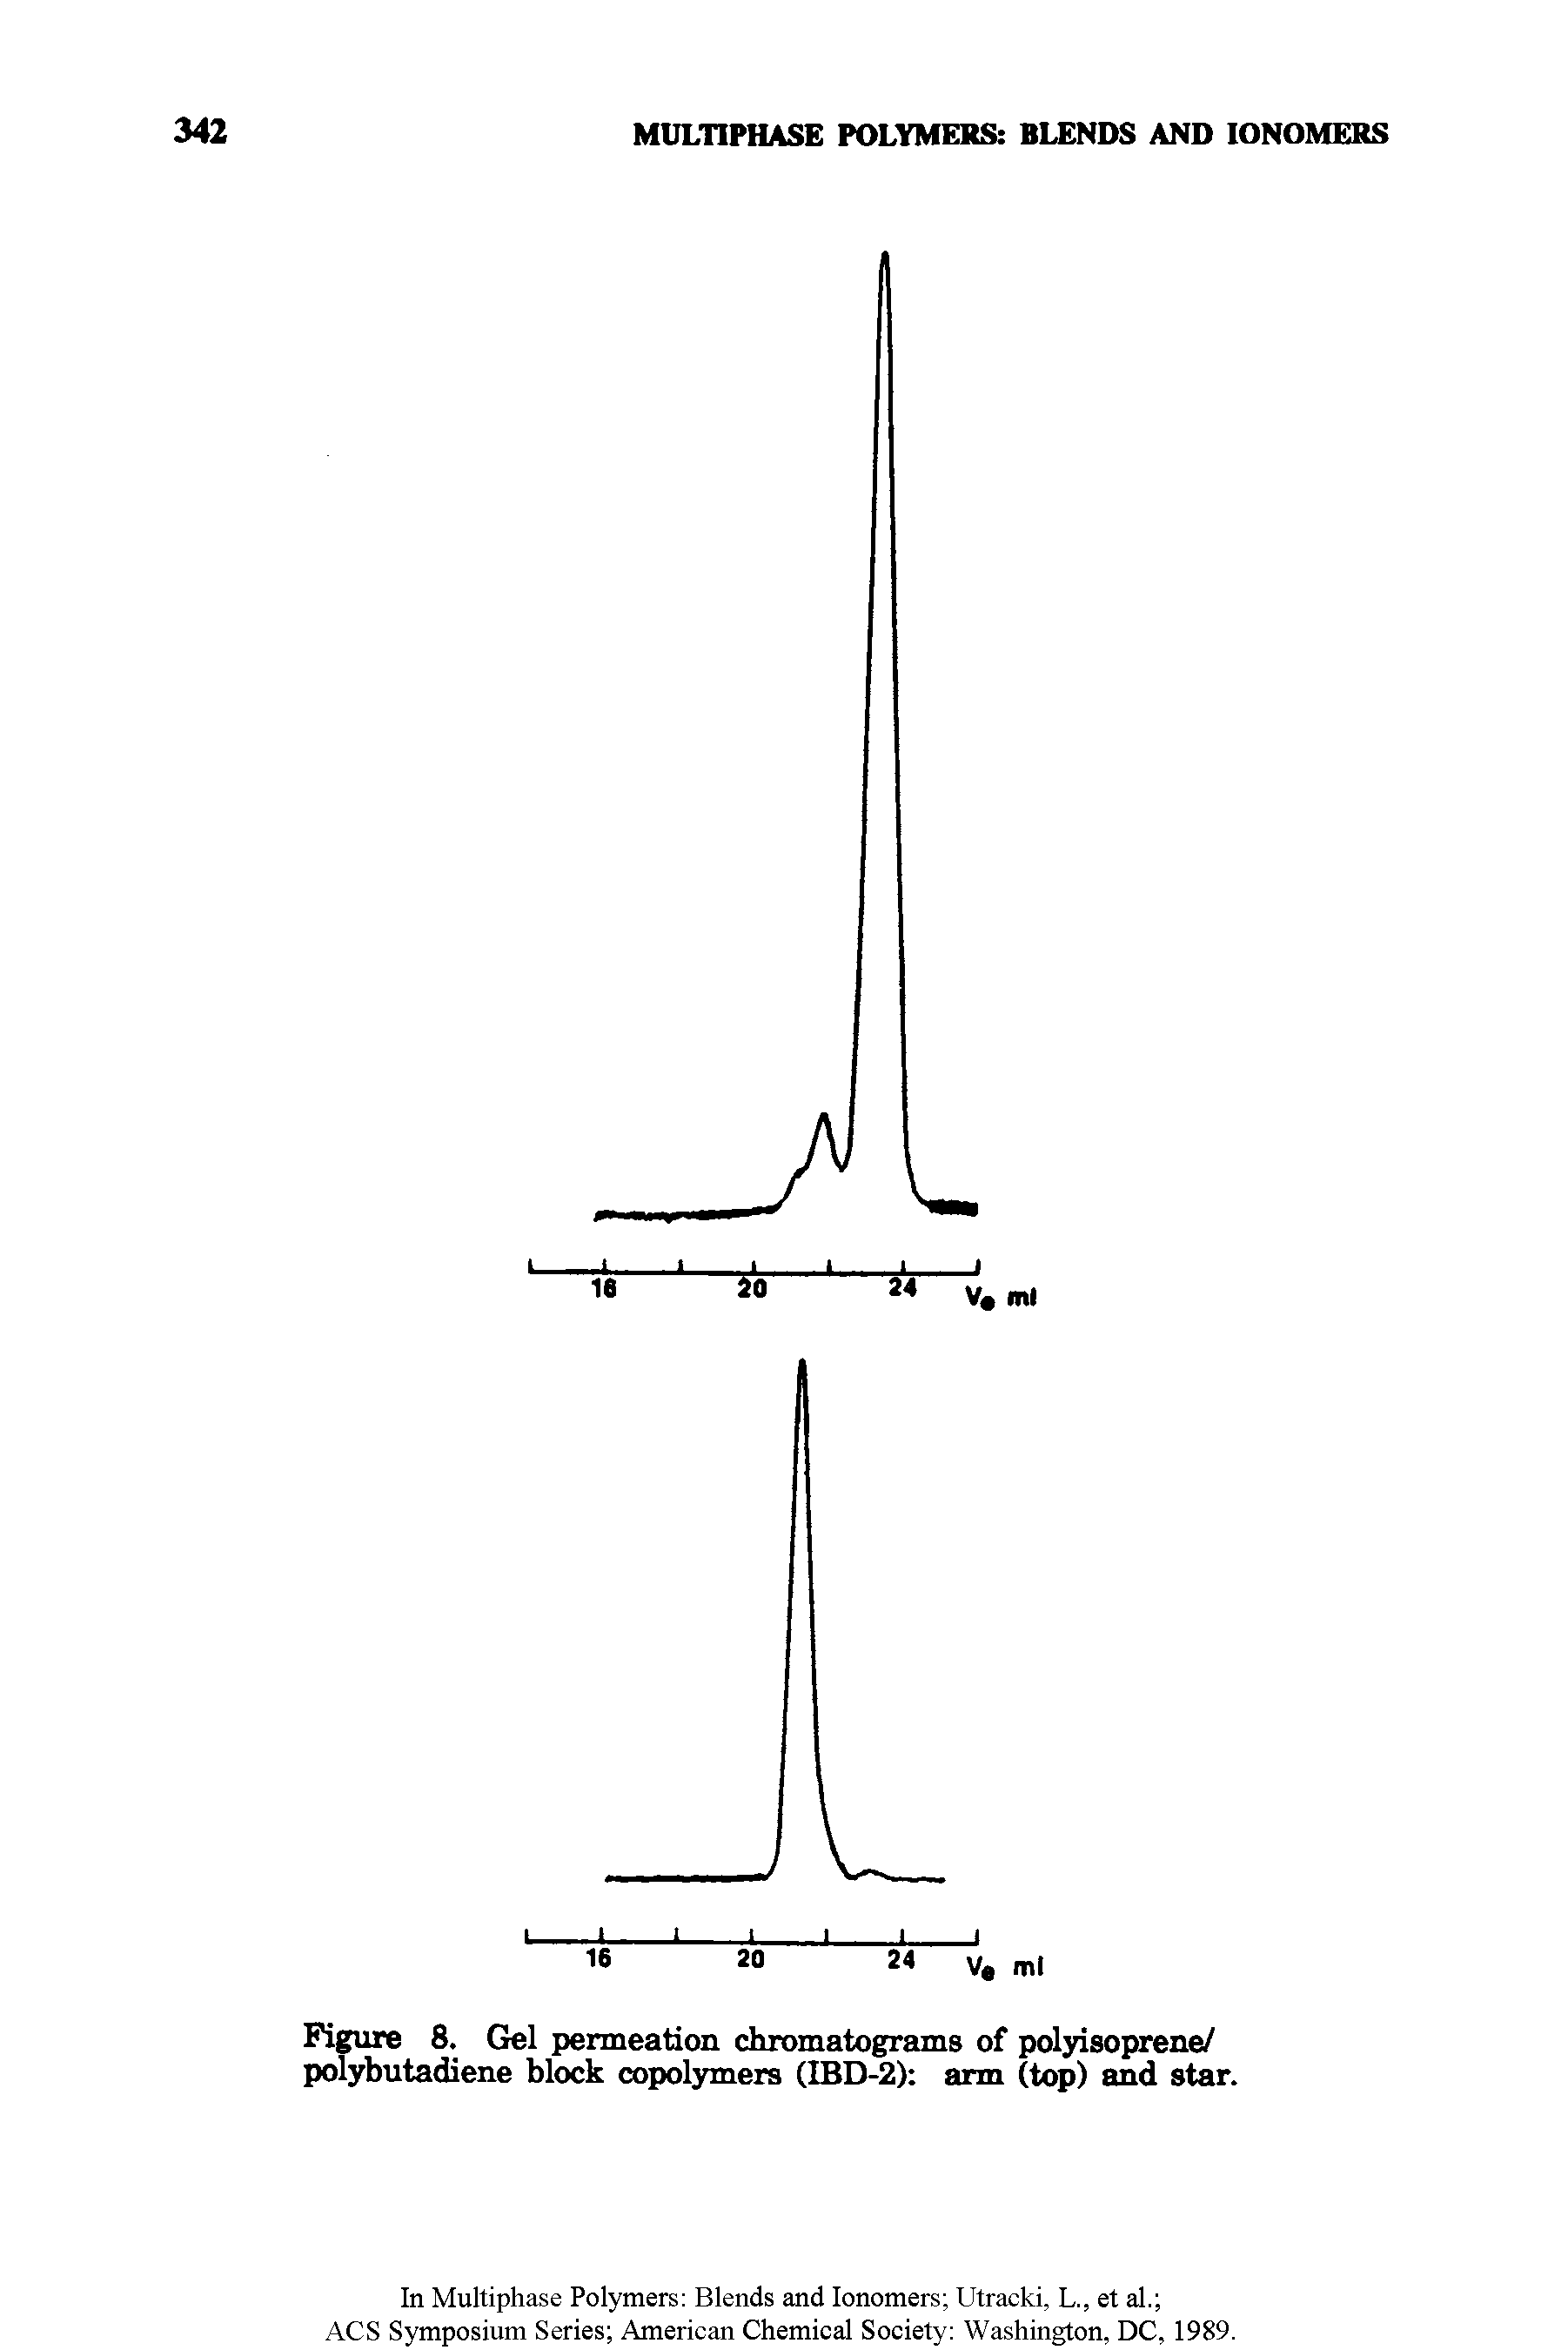 Figure 8. Gel permeatioii chromatograms of polyisoprene/ polybutadiene block copolymers (IBD-2) arm (top) and star.